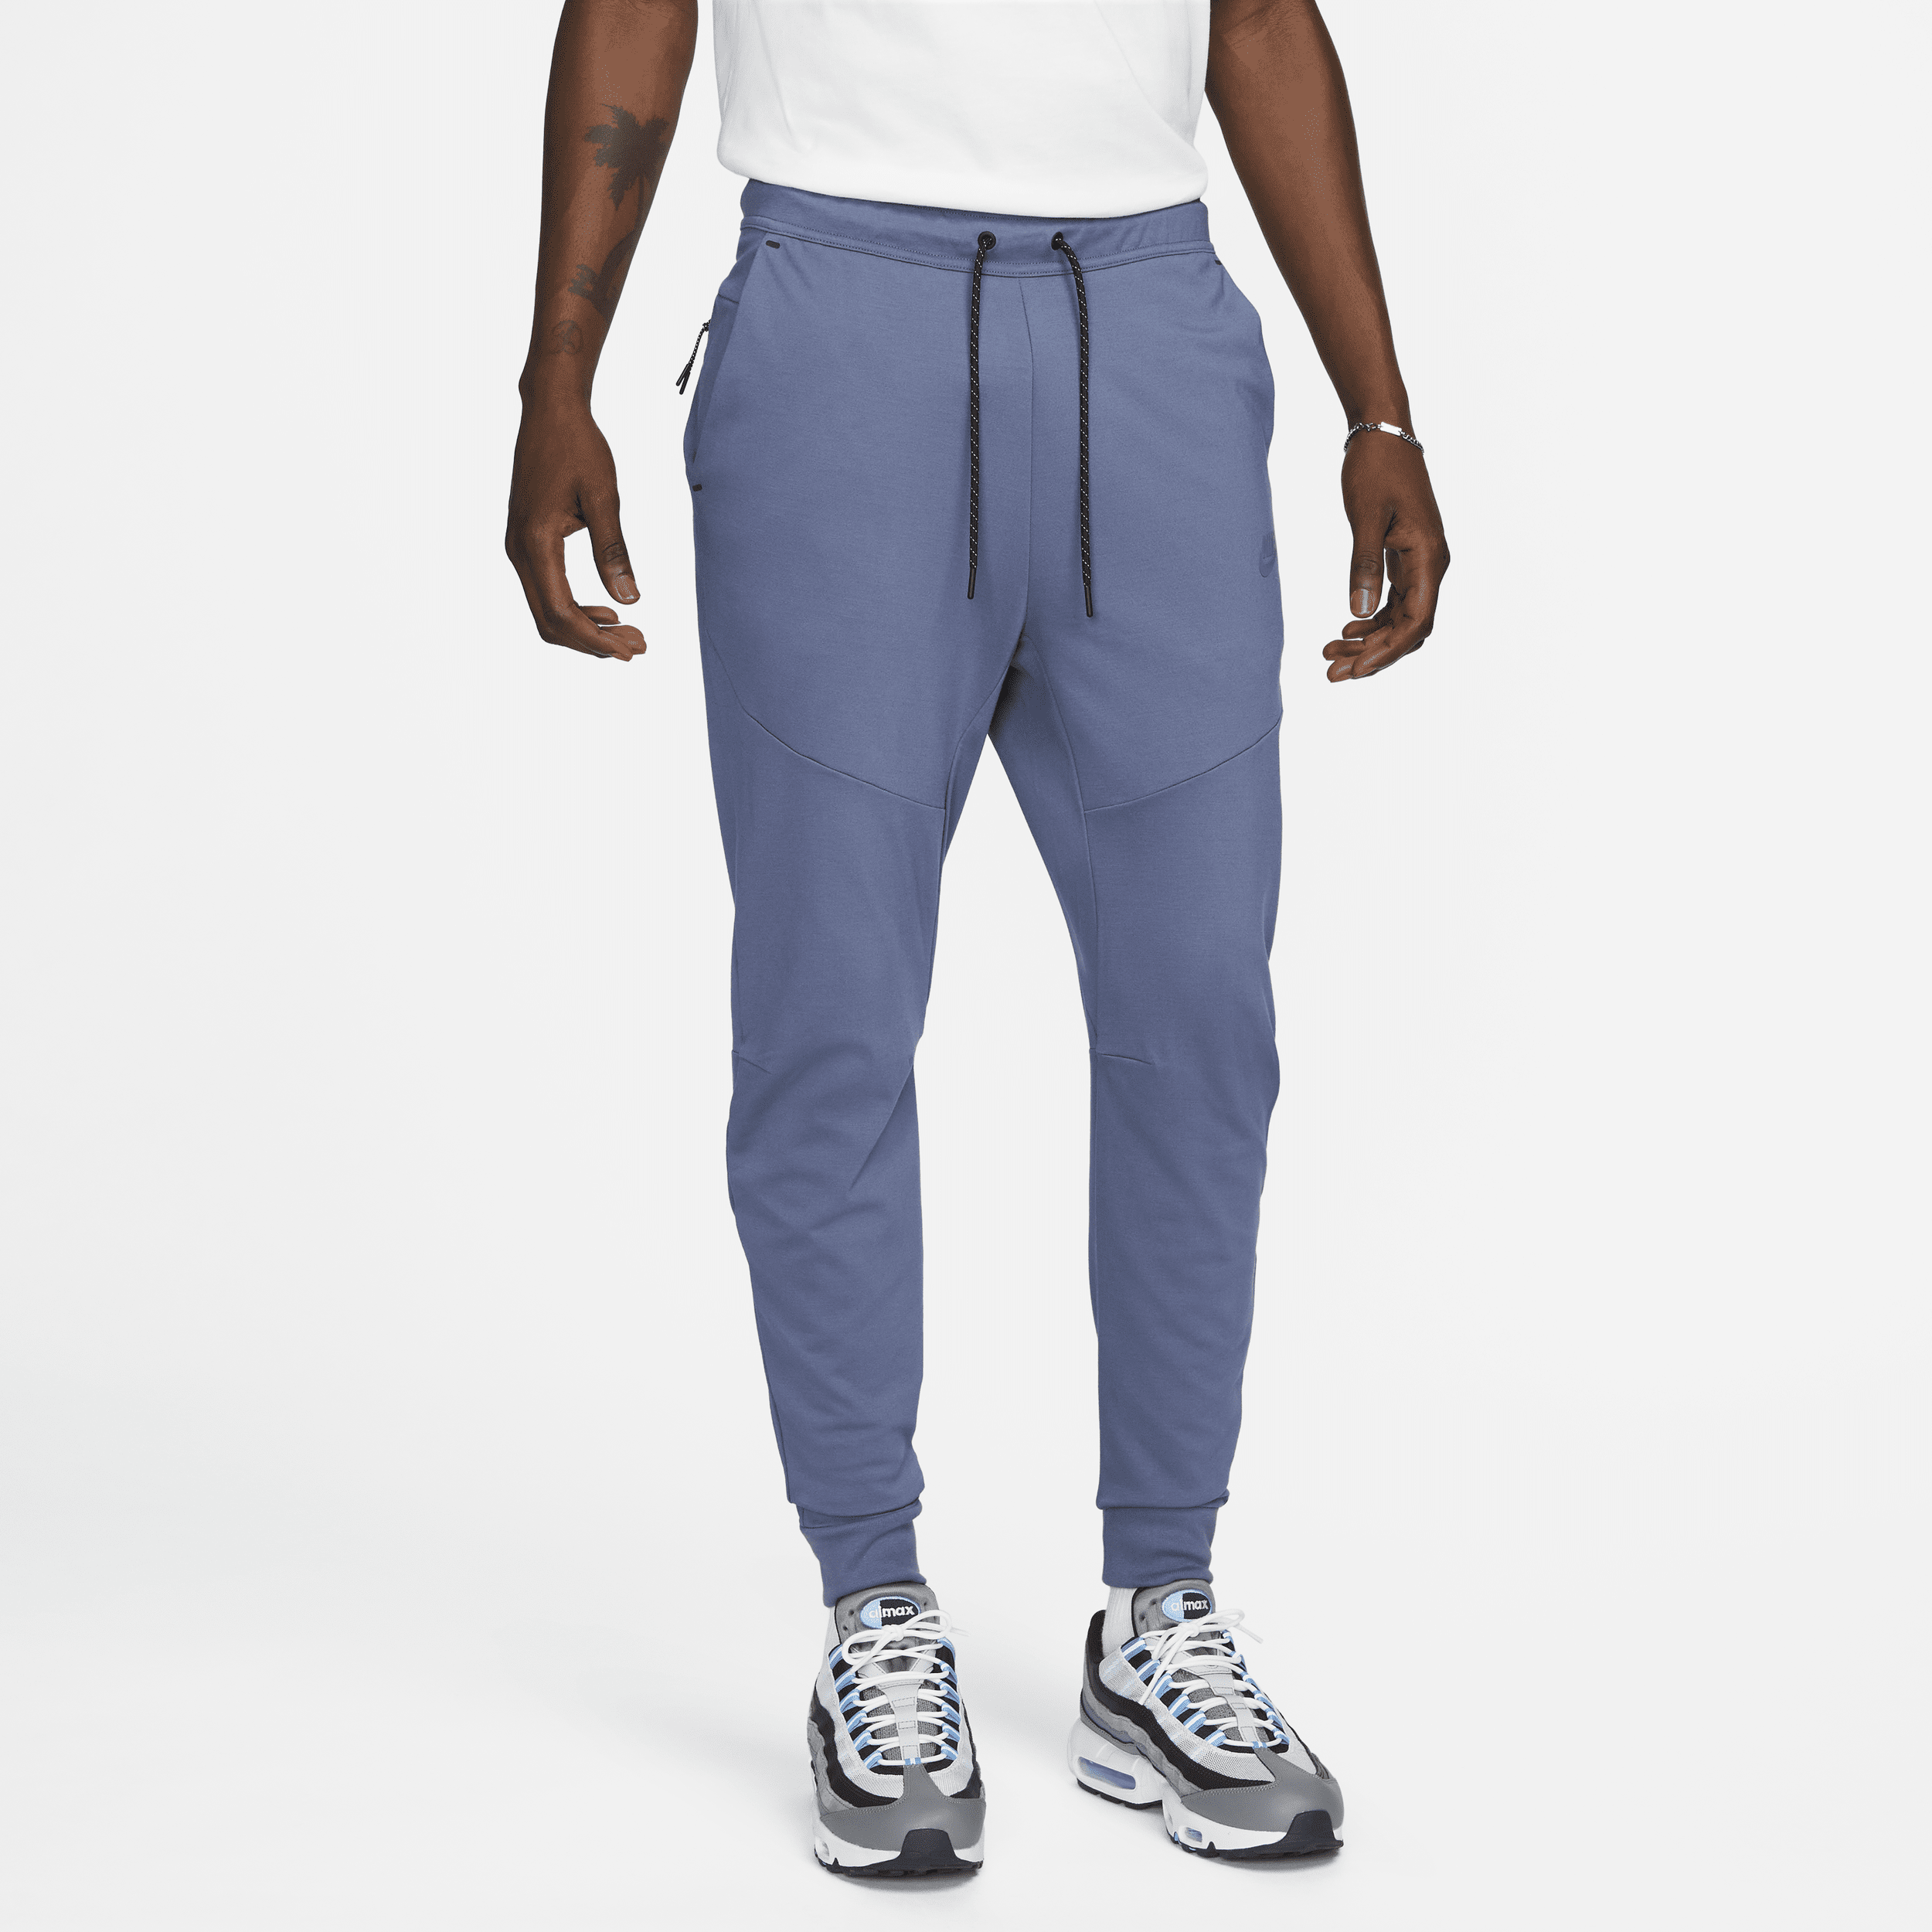 Lette Nike Sportswear Tech Fleece-joggers med slank pasform til mænd - blå